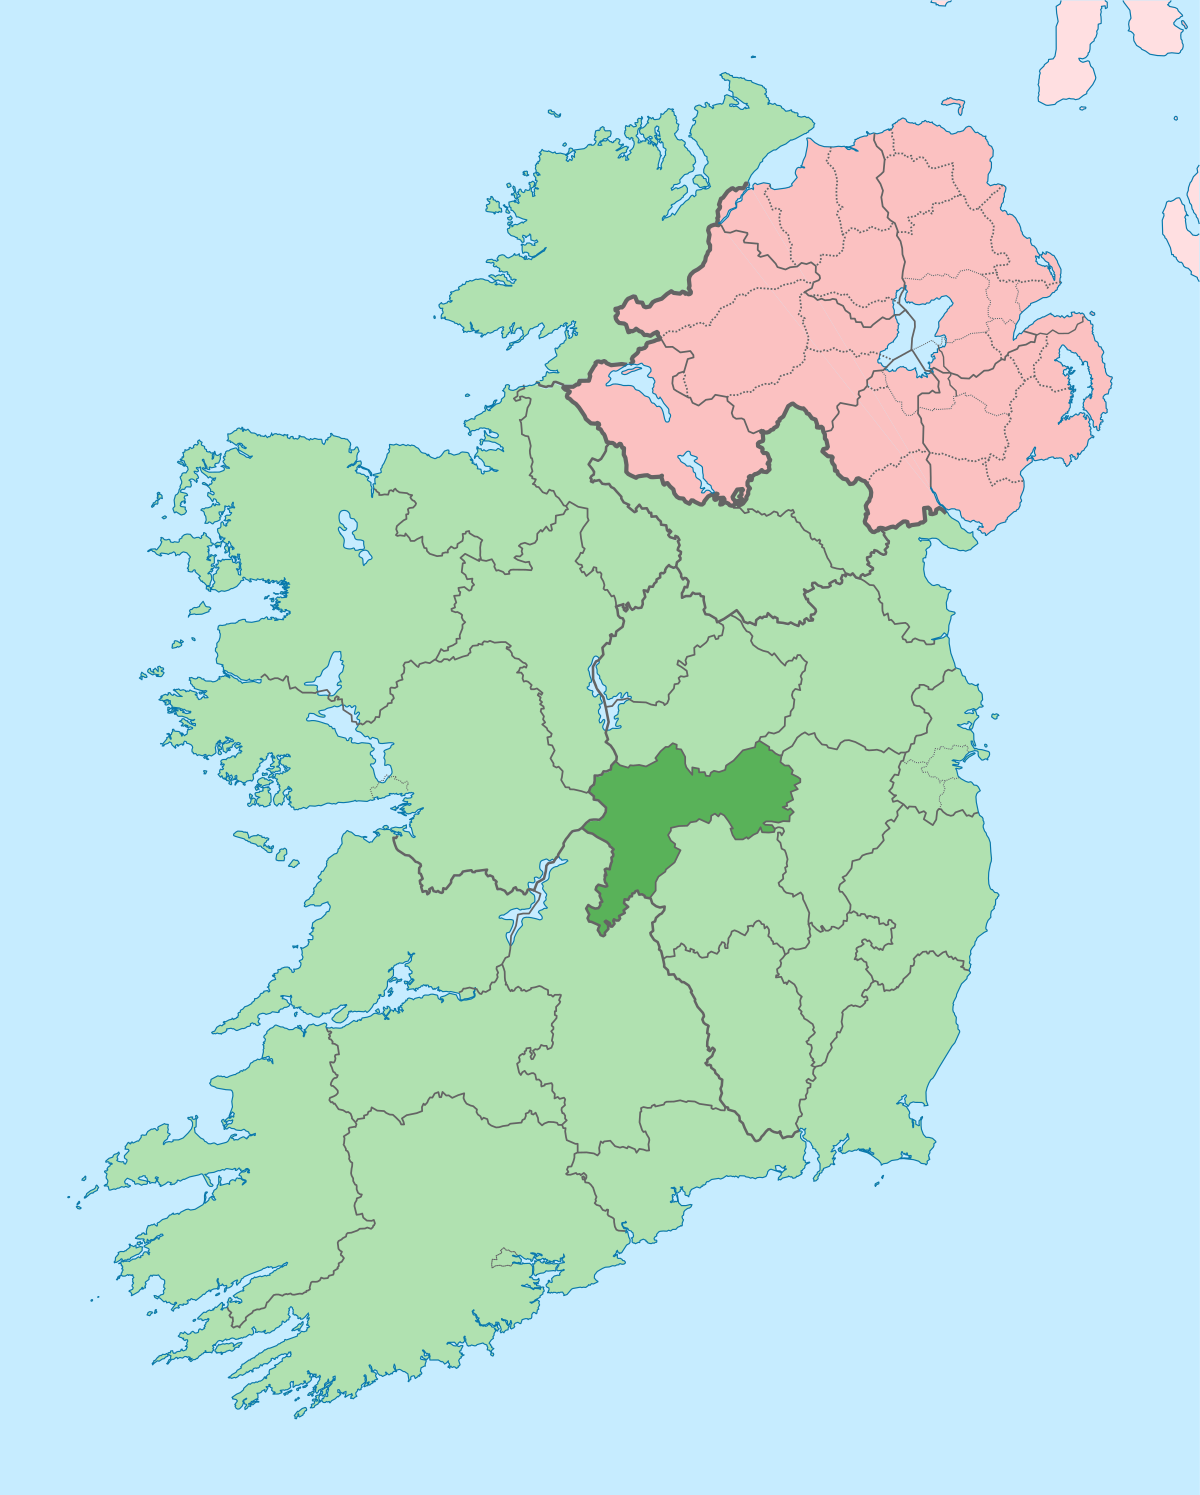 Clonmacnoise - Wikipedia